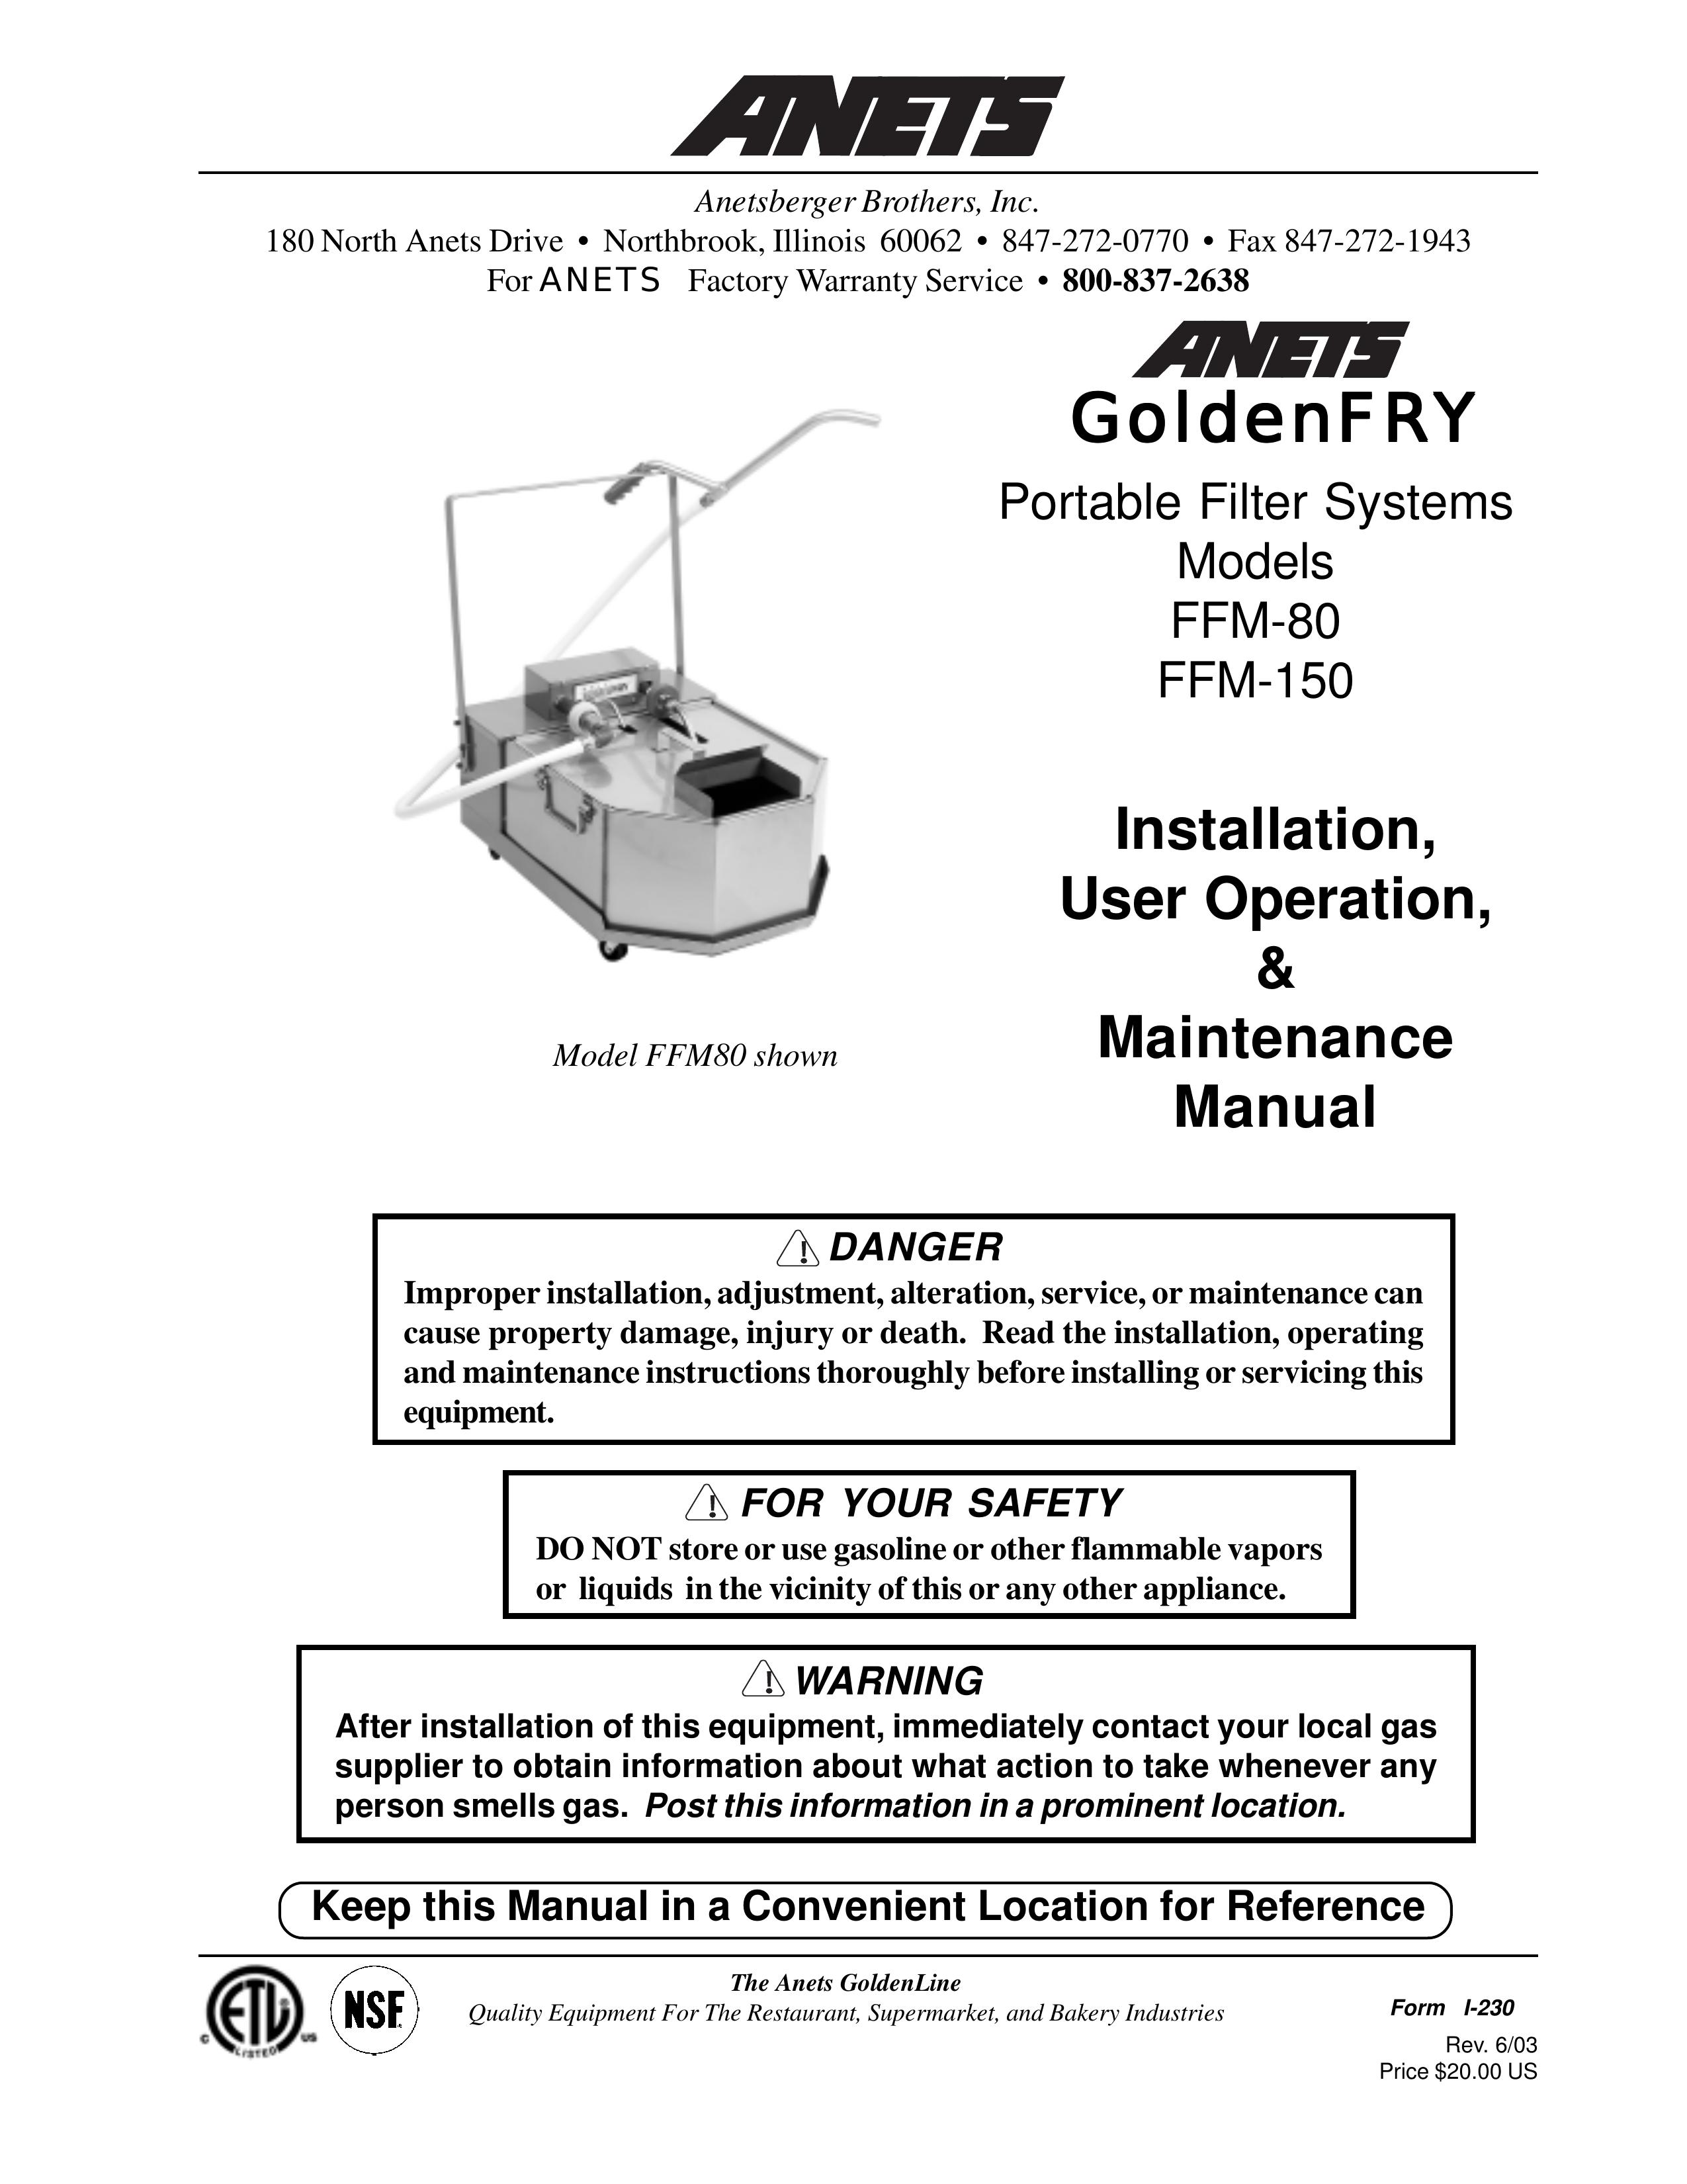 Anetsberger Brothers FFM-150 Water Dispenser User Manual